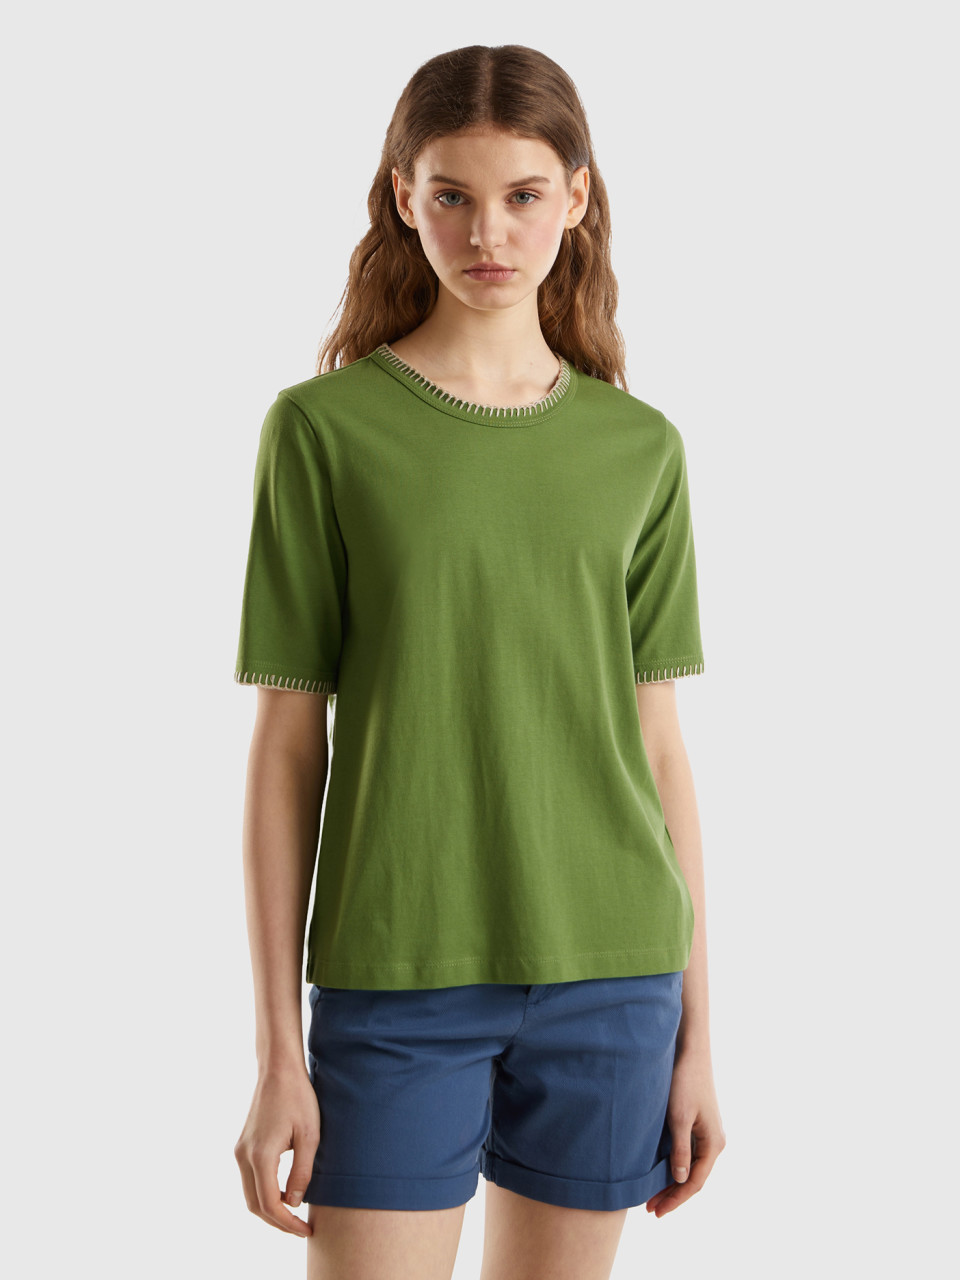 Benetton, Cotton Crew Neck T-shirt, Military Green, Women